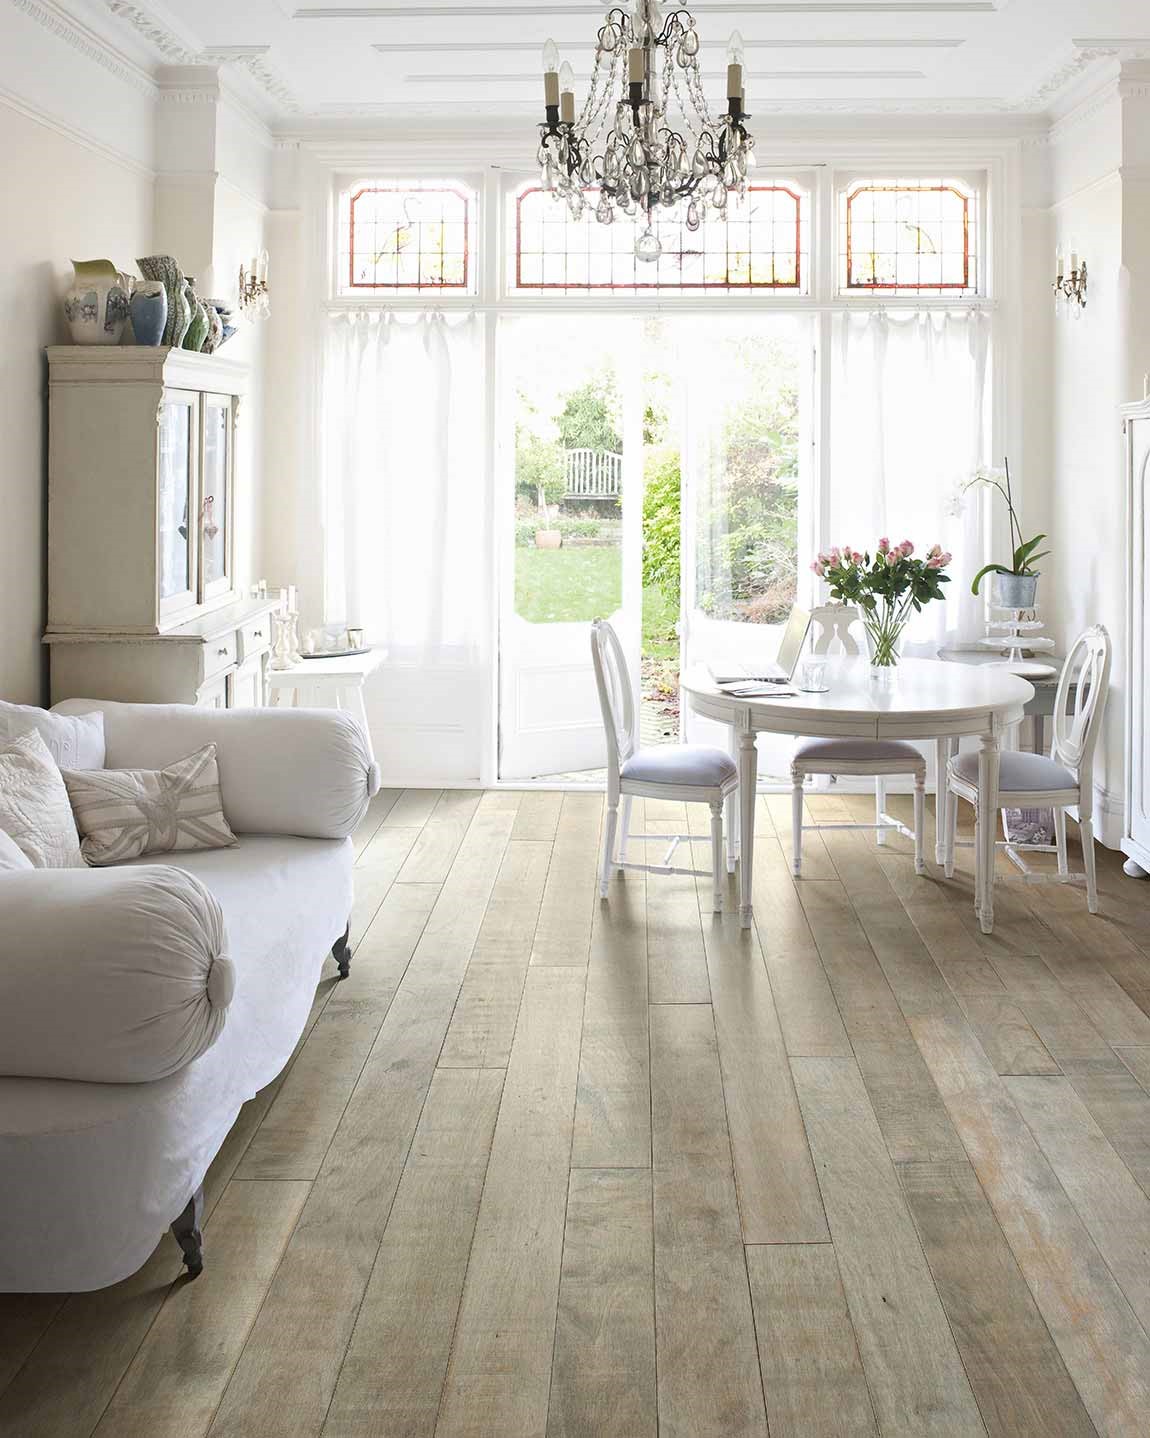 Top Five Flooring Trends In 2020, Photos Of Living Rooms With Hardwood Floors